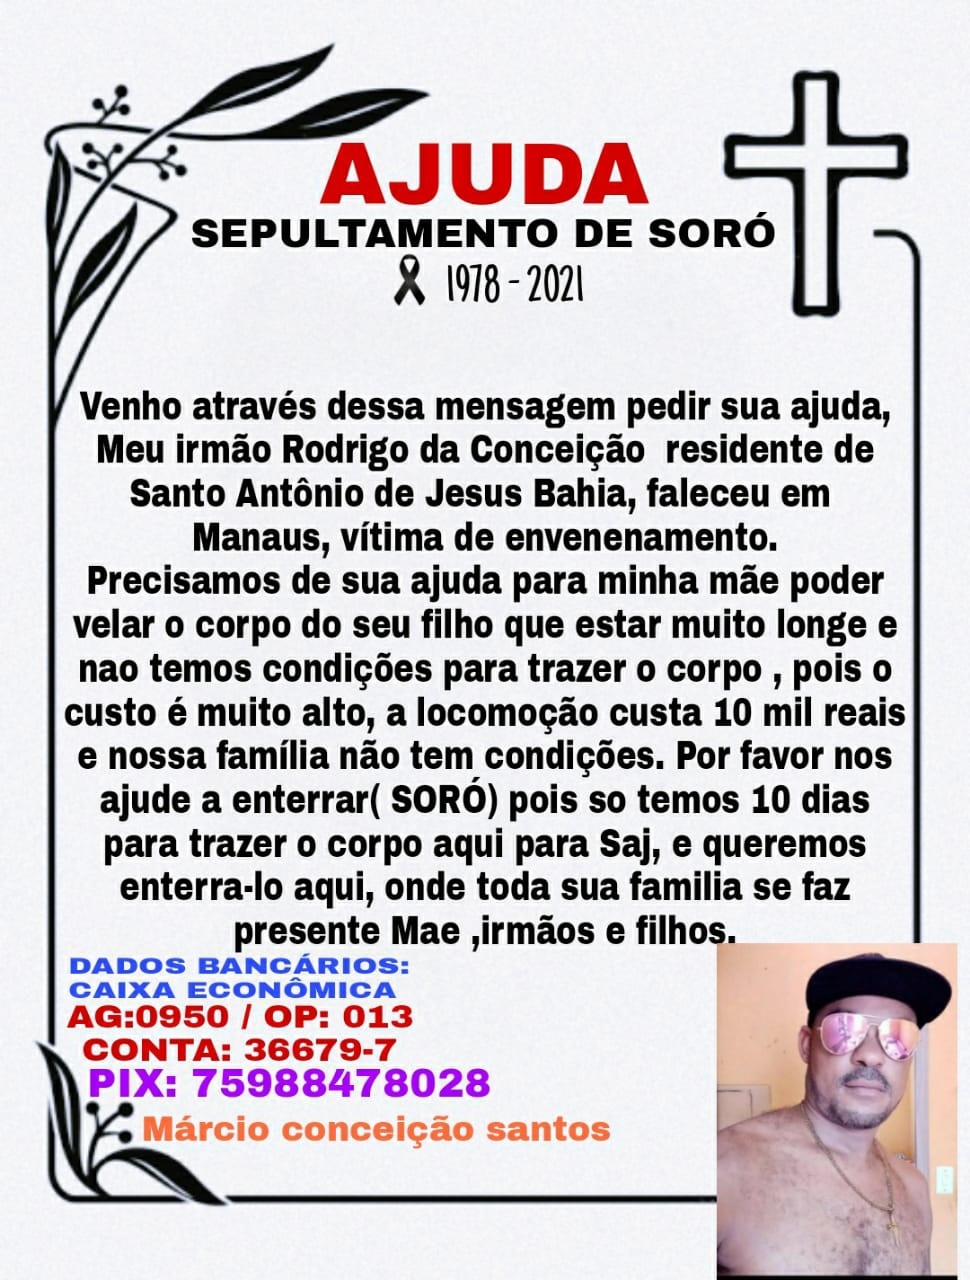 Família faz campanha para custear translado de corpo de santoantoniense morto em Manaus